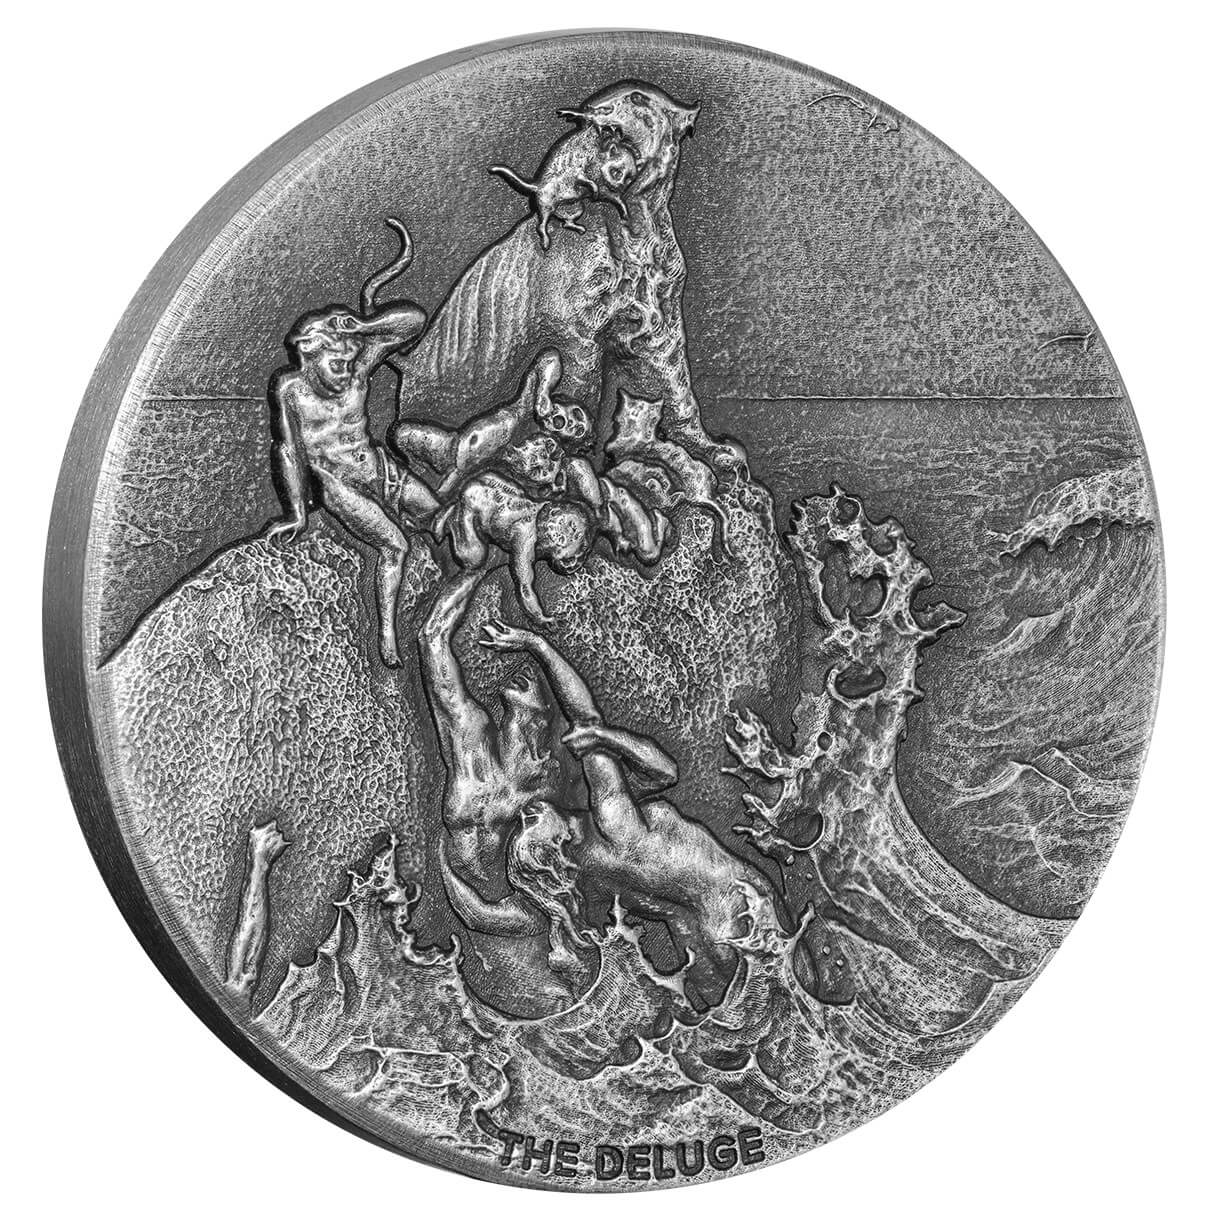 2022 Biblical Seriesthe Deluge 2 Oz Silver Antique Coin Scottsdale Mint 09